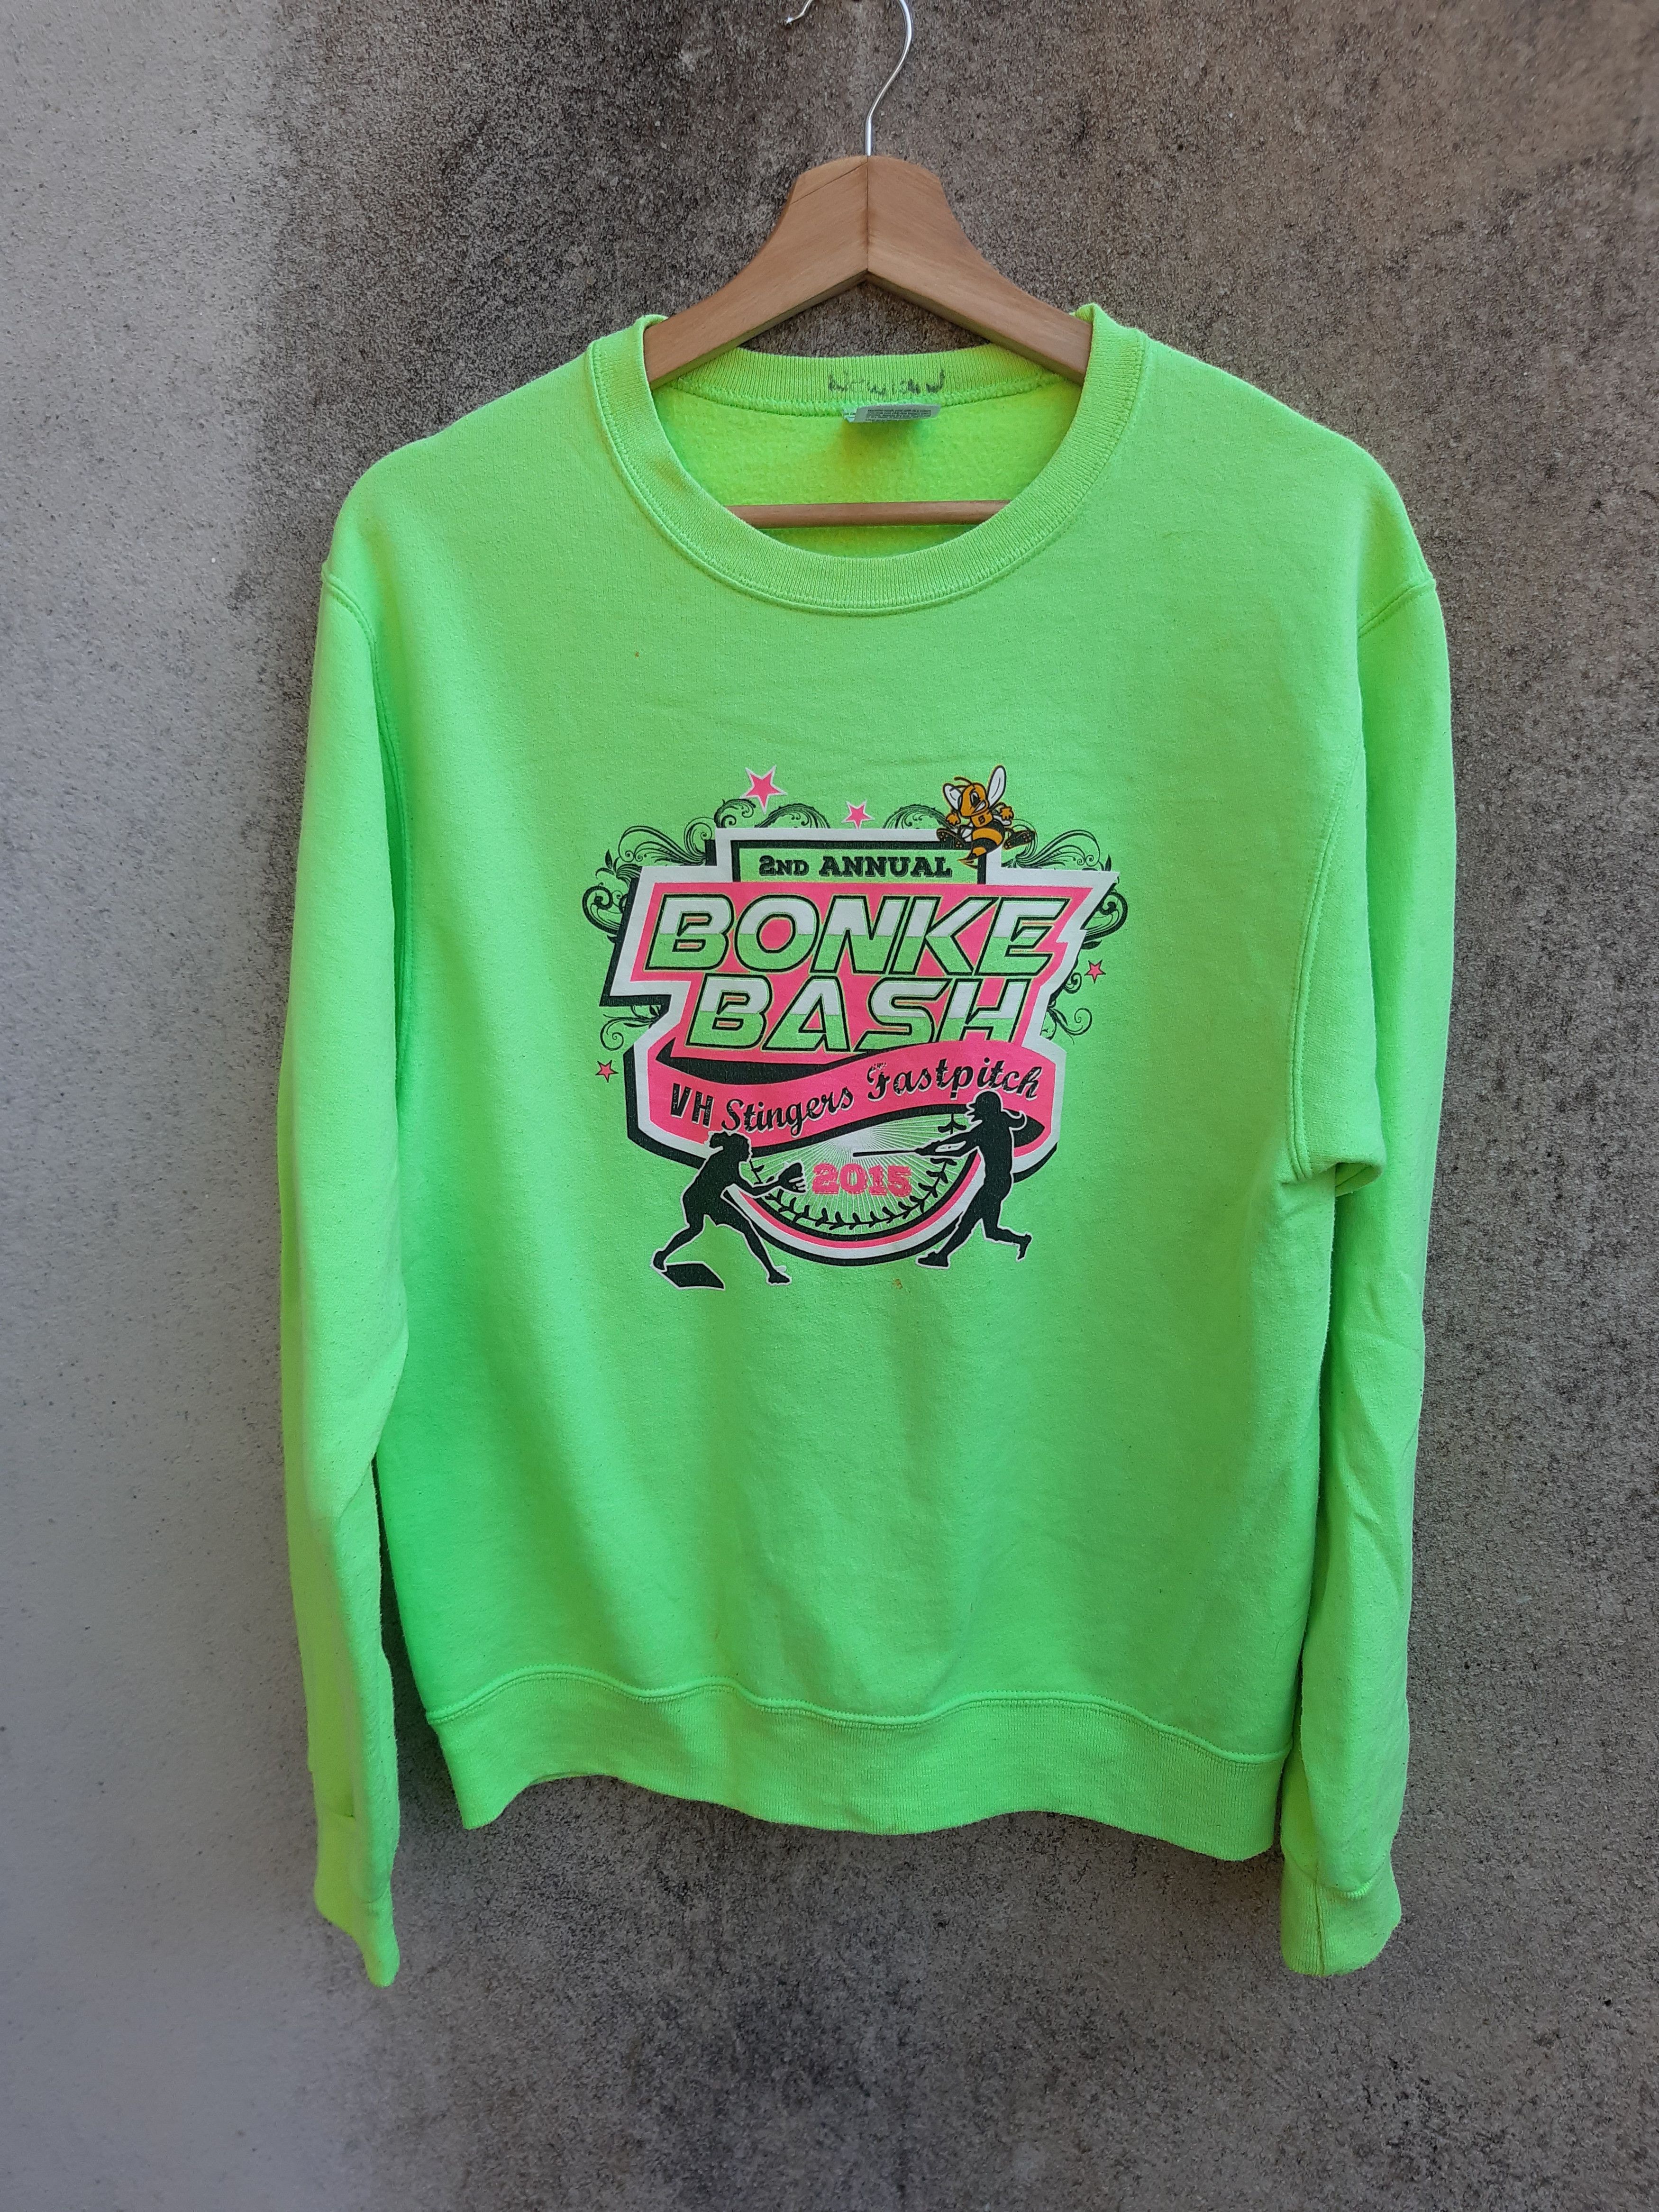 Vintage Sweatshirt 2ad annual BONKE BASH big logo Size US S / EU 44-46 / 1 - 1 Preview